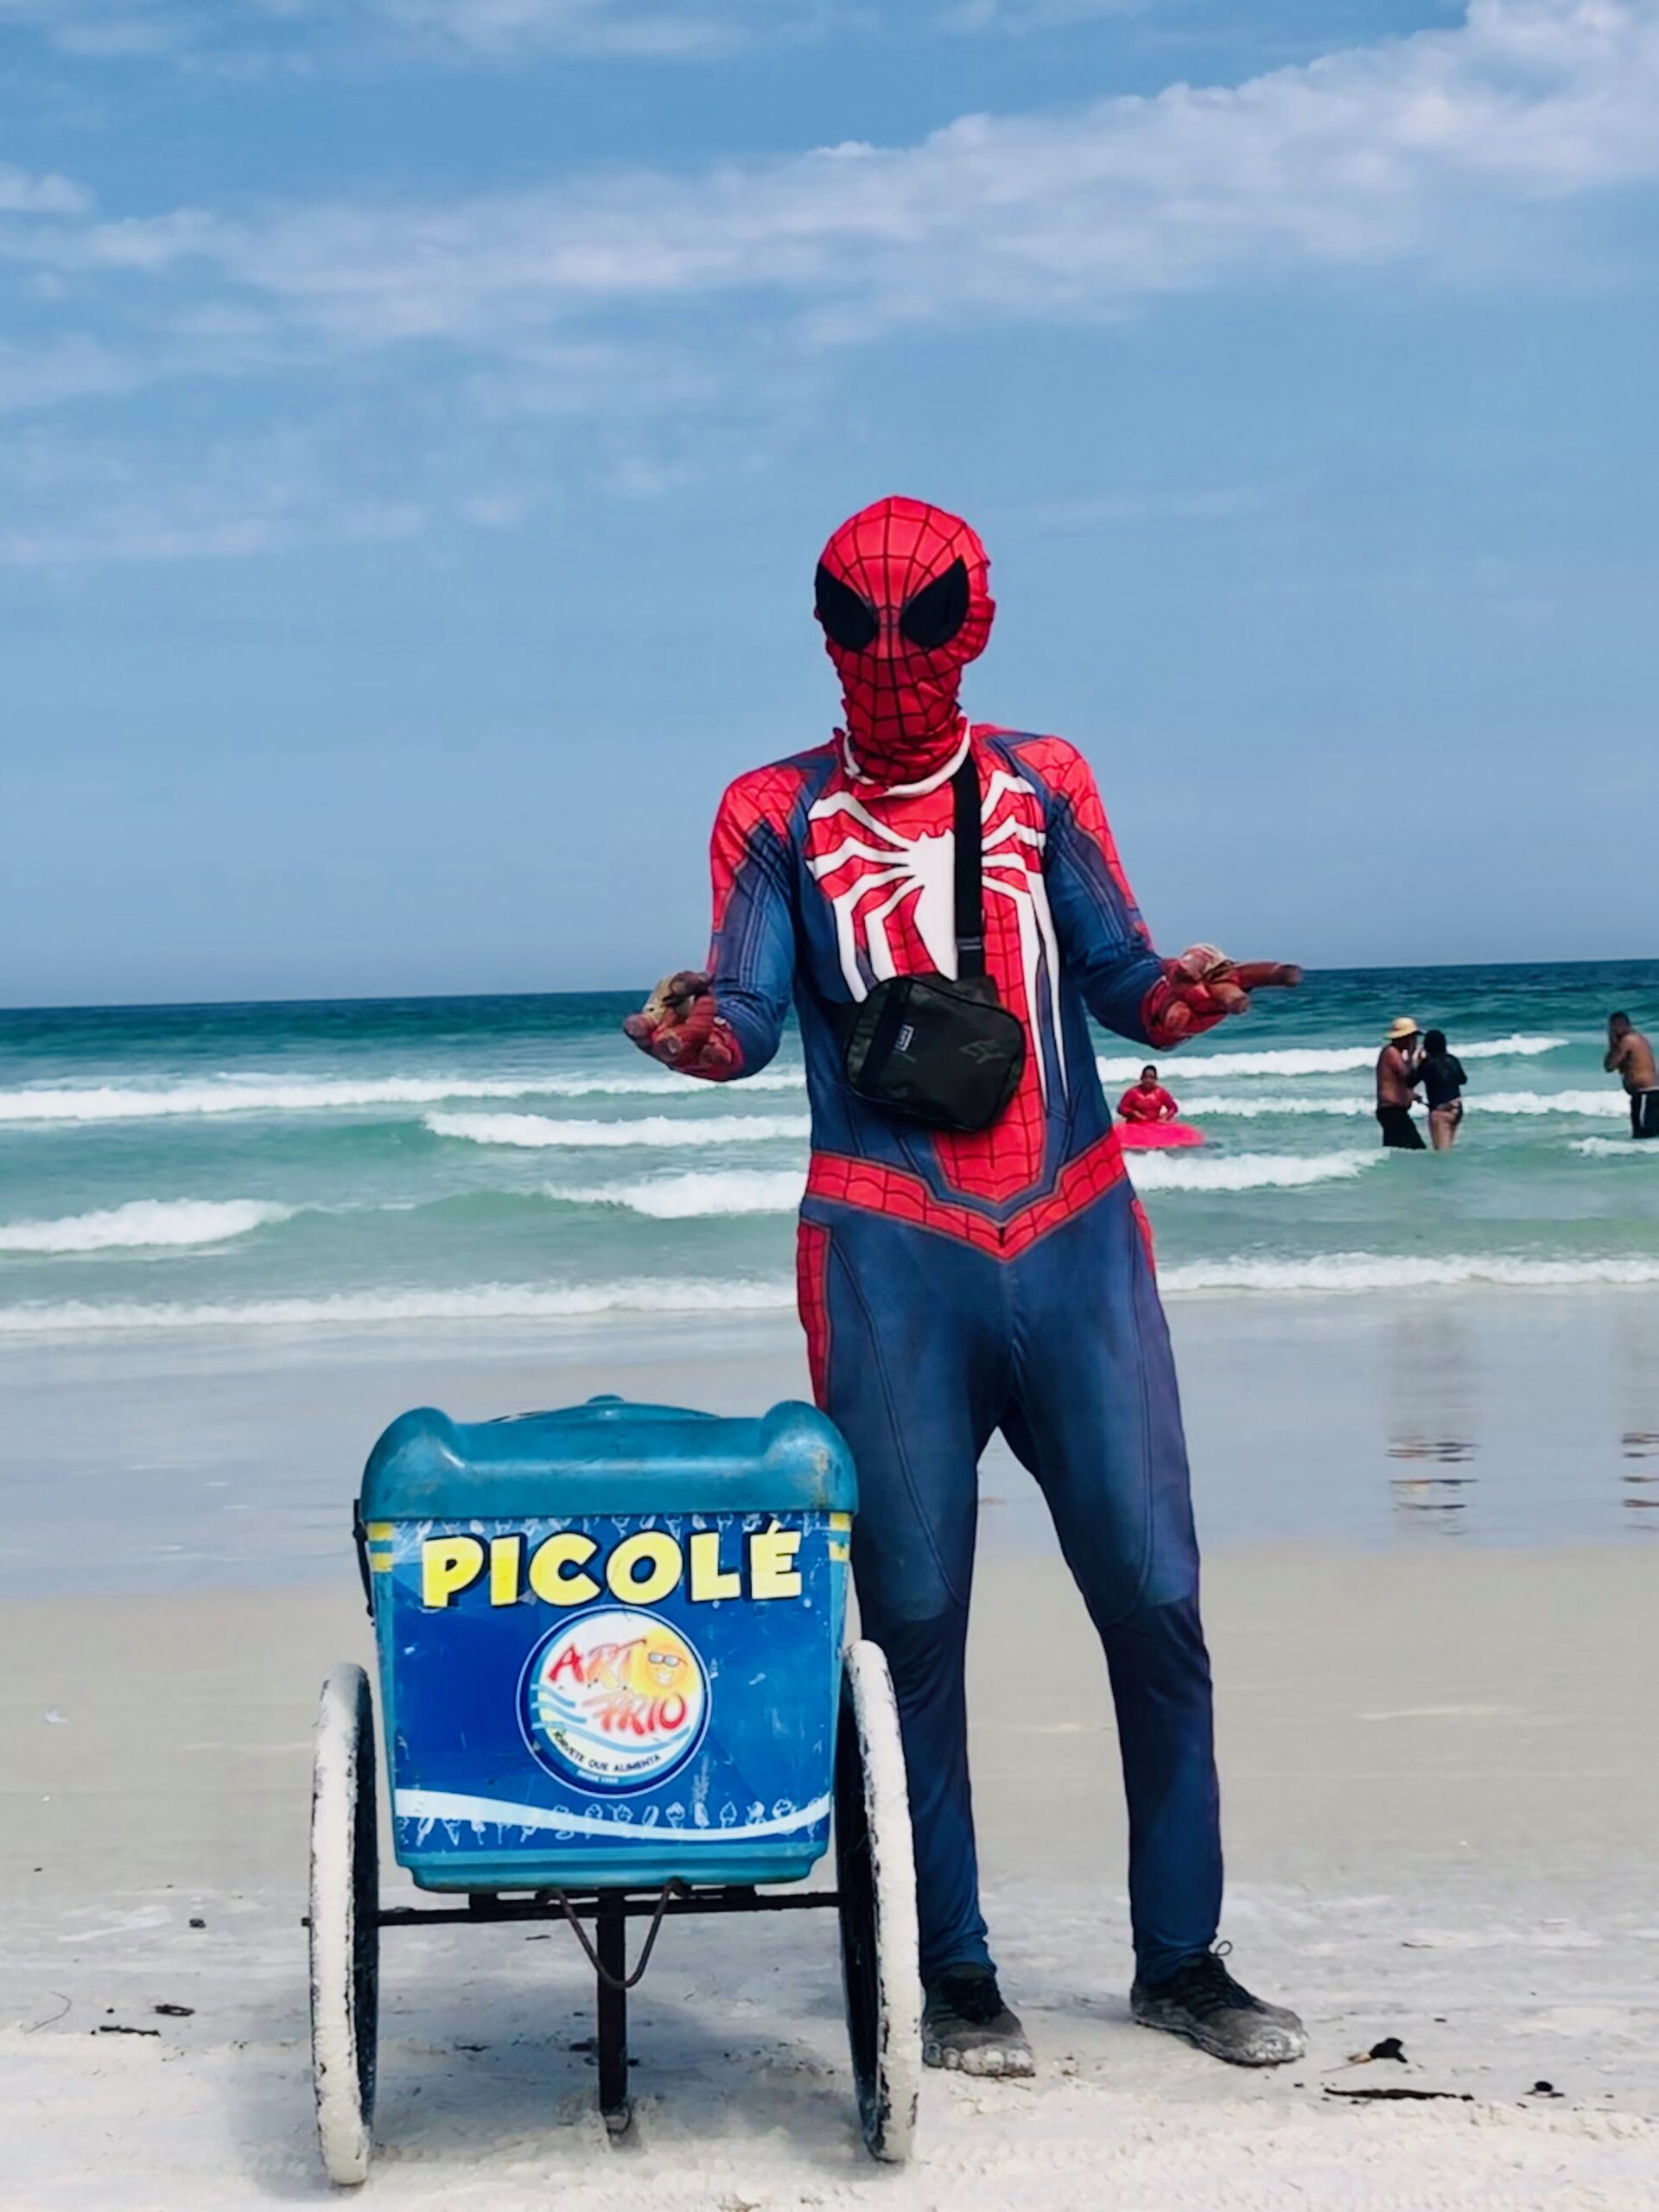 Brésil-Brasil-Brazil-Praia-das-dunas-Cabo-Frio-État-de-Rio-Janeiro-vendedor-Spider-Man vendeur de glaces pour les enfants